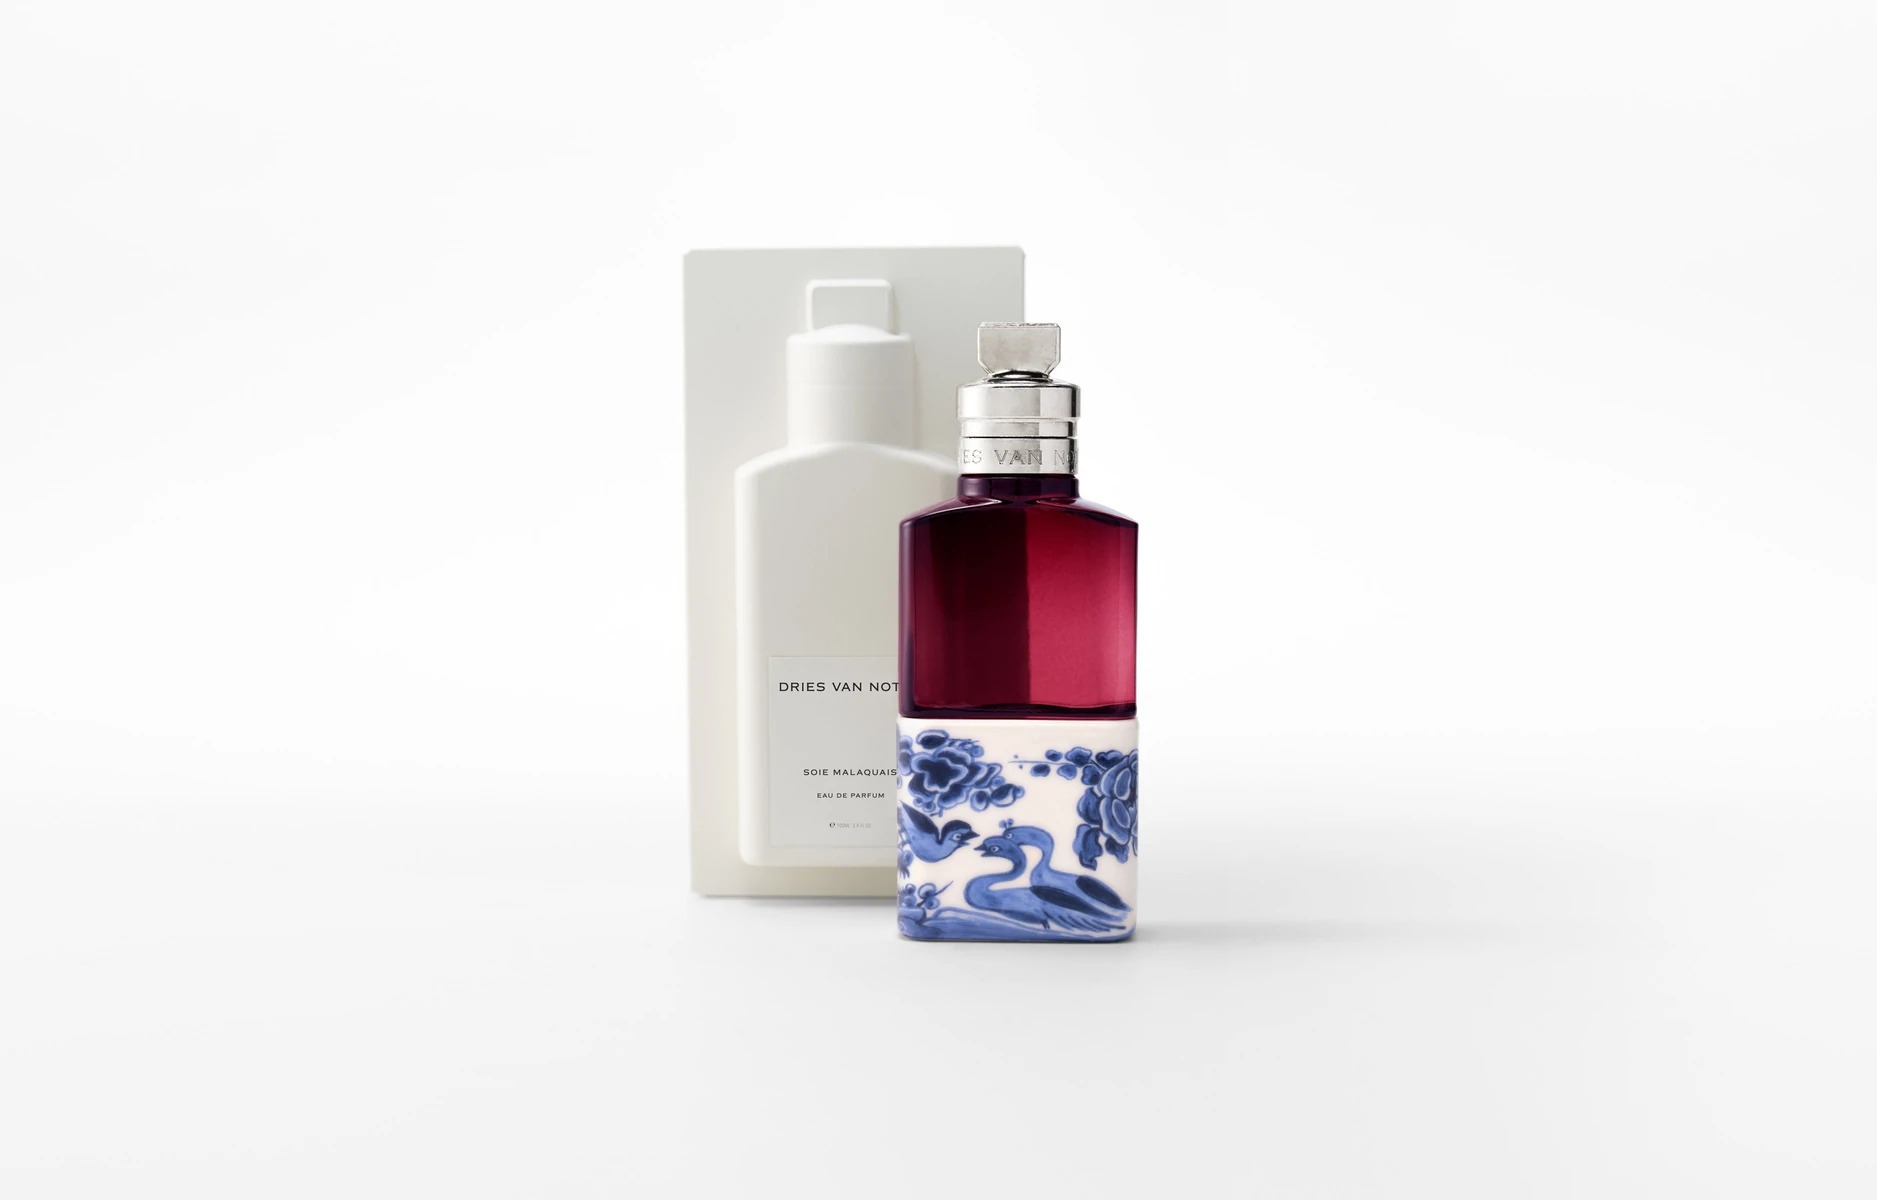 Dries Van Noten lanzó una línea exclusiva de perfumes